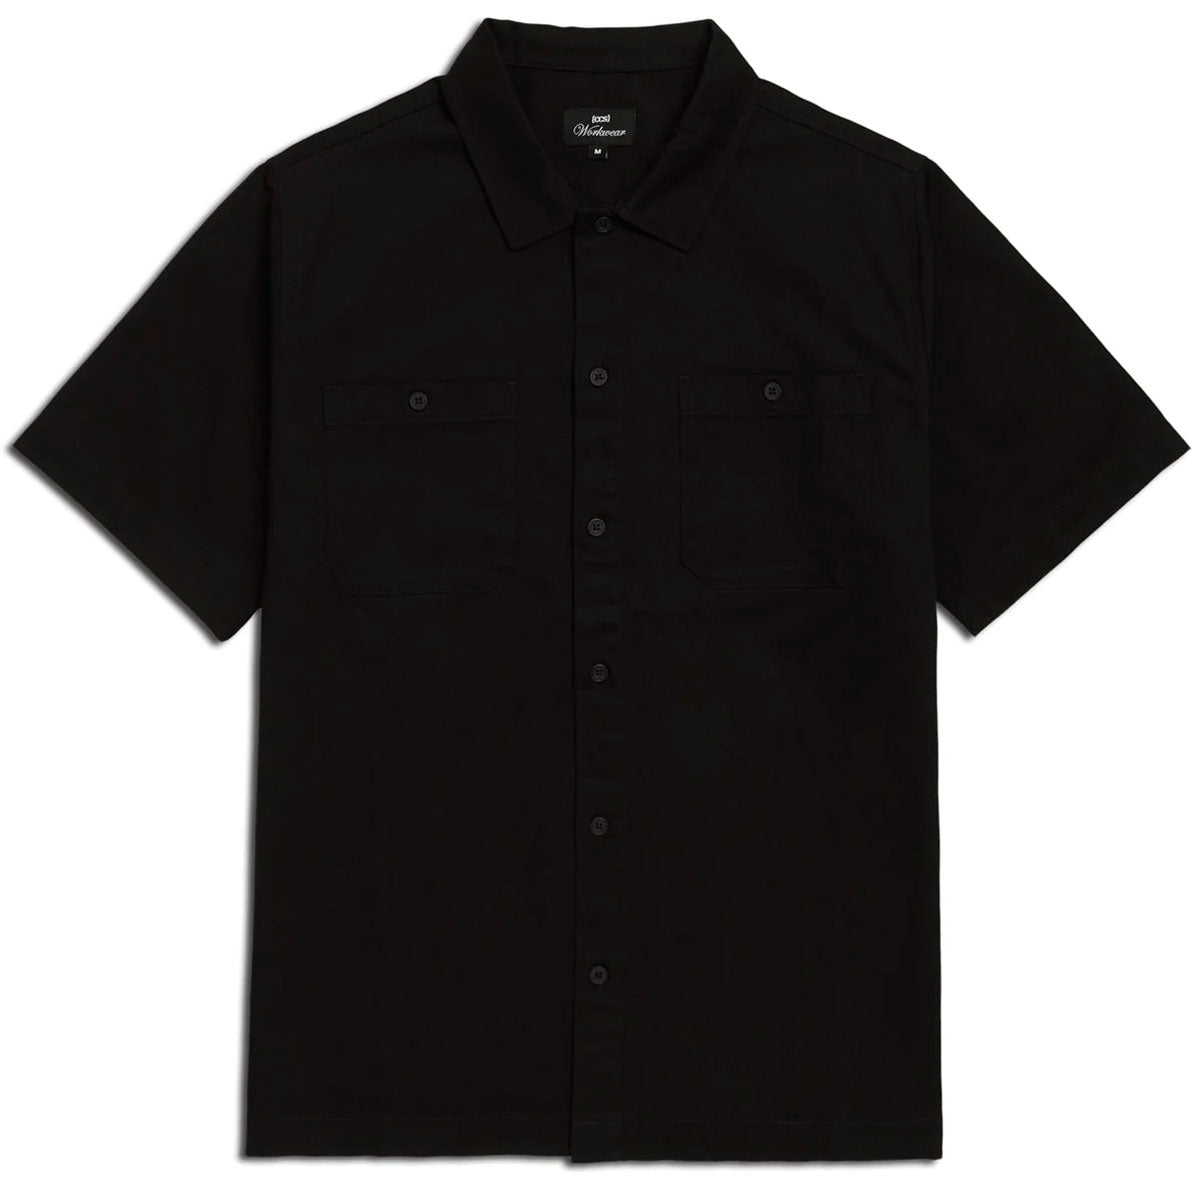 CCS Custom Embroidered Work Shirt - Black image 2